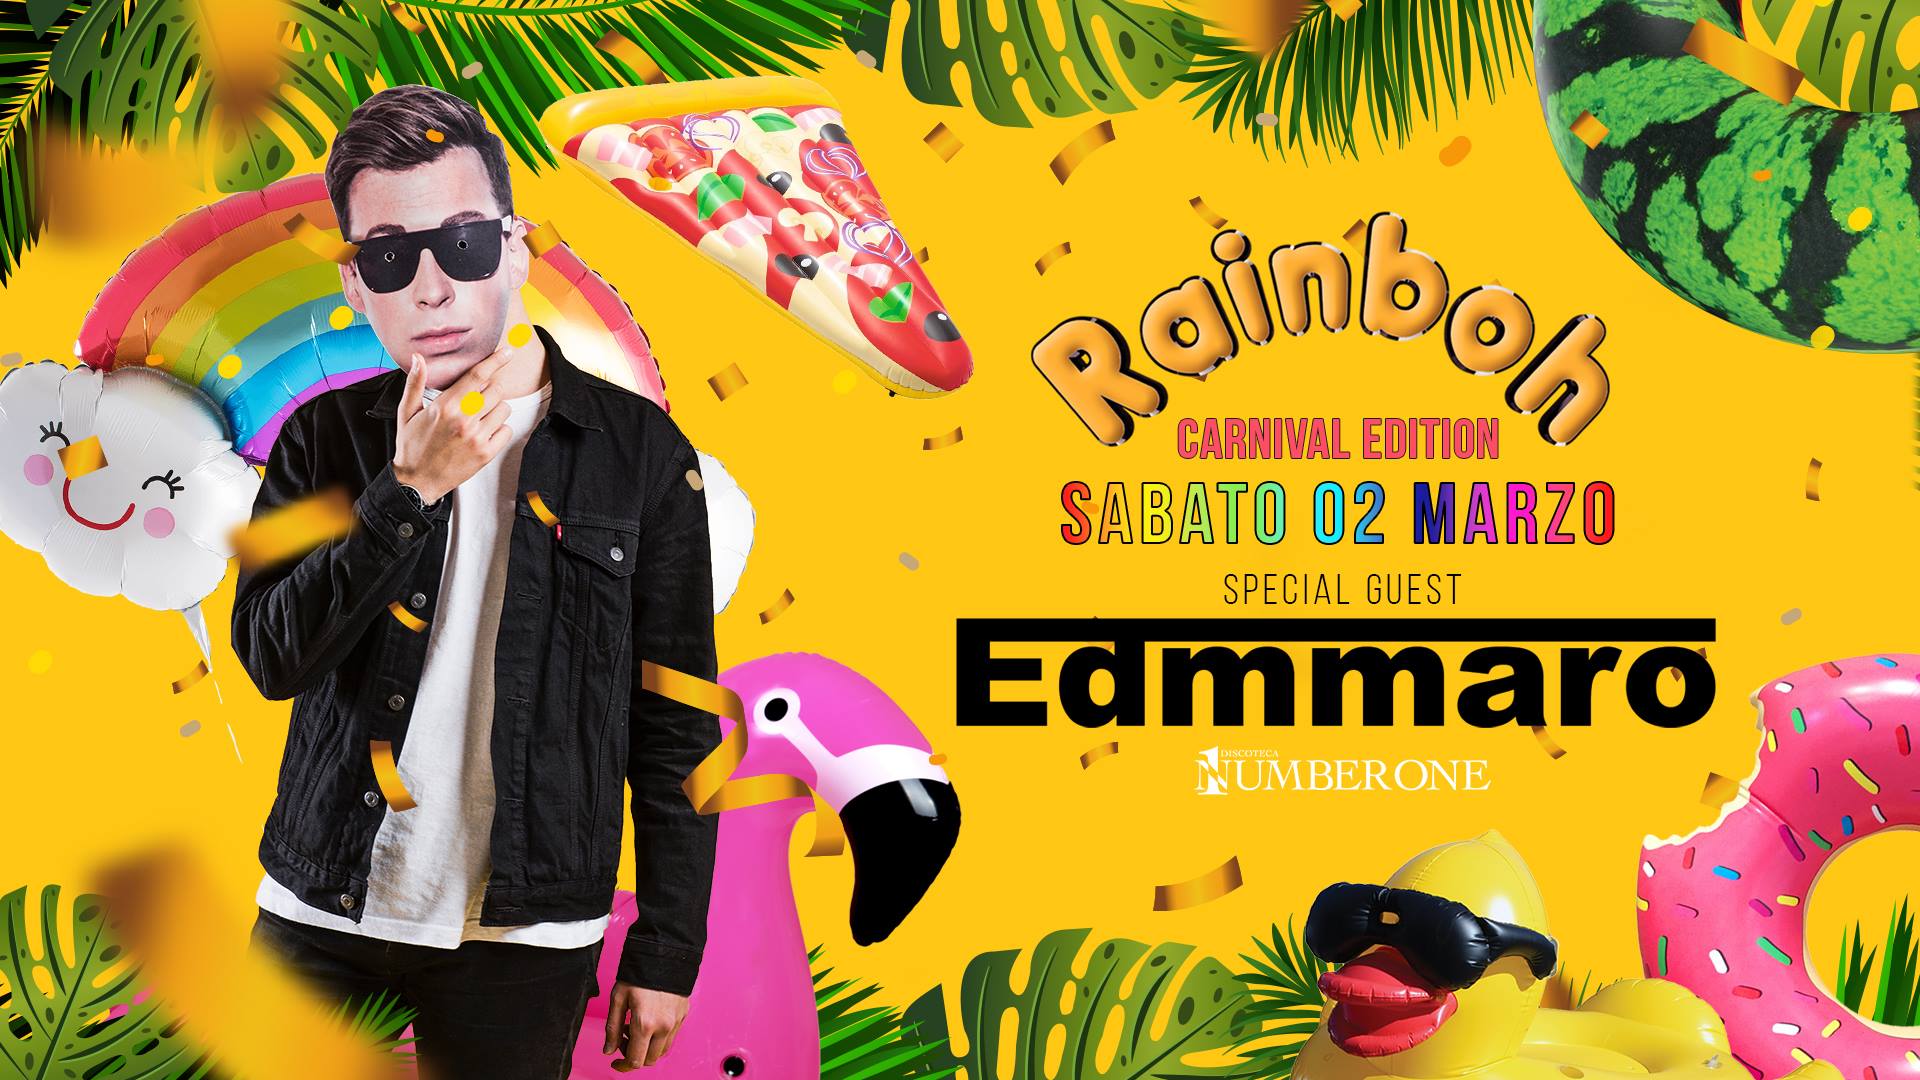 Edmmaro – Rainboh Carnival Edition